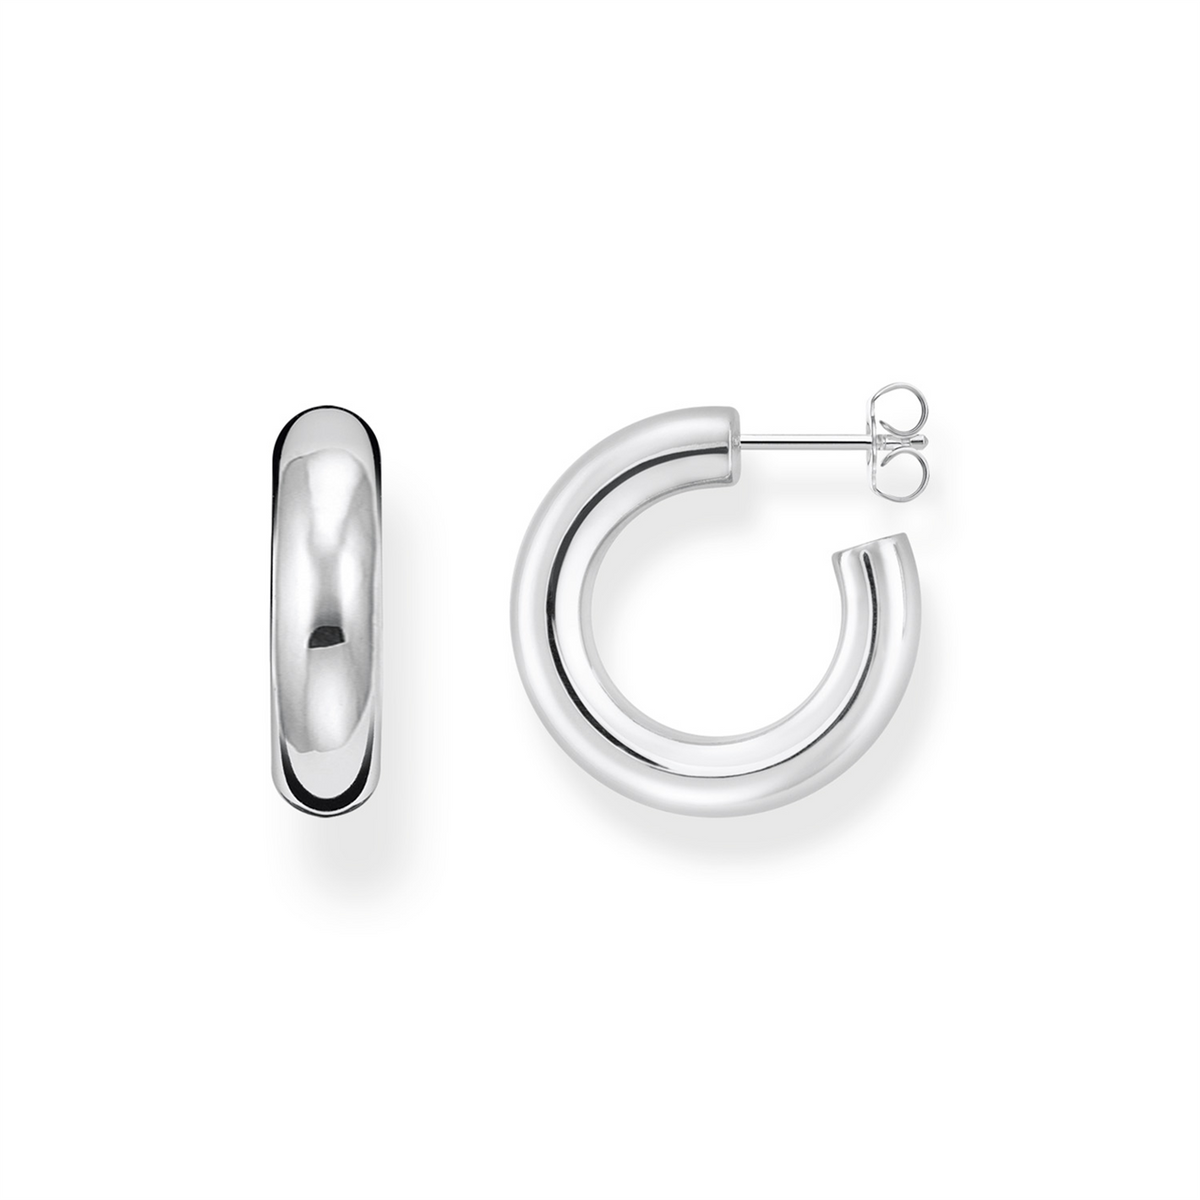 Thomas Sabo Chunky Hoop Earrings - Small Silver